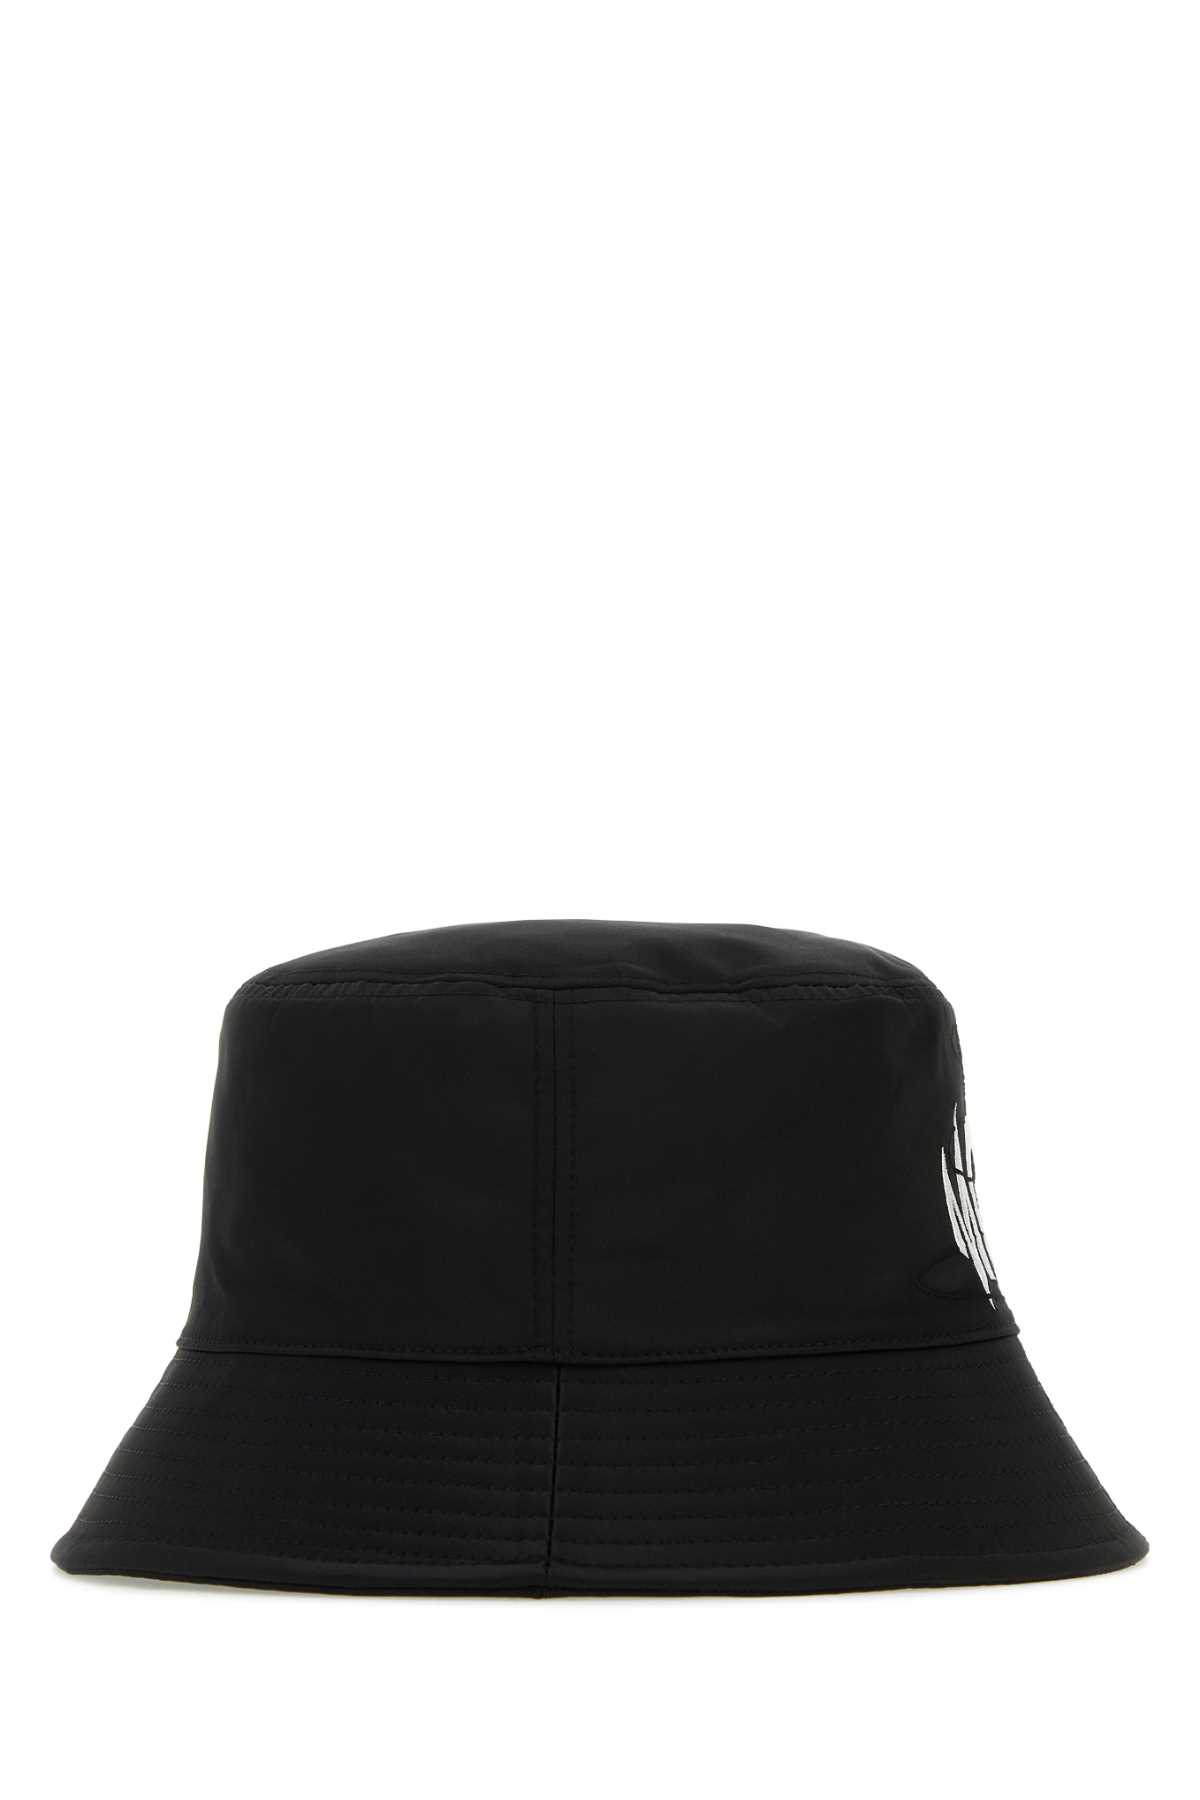 Shop Mcm Black Nylon Bucket Hat